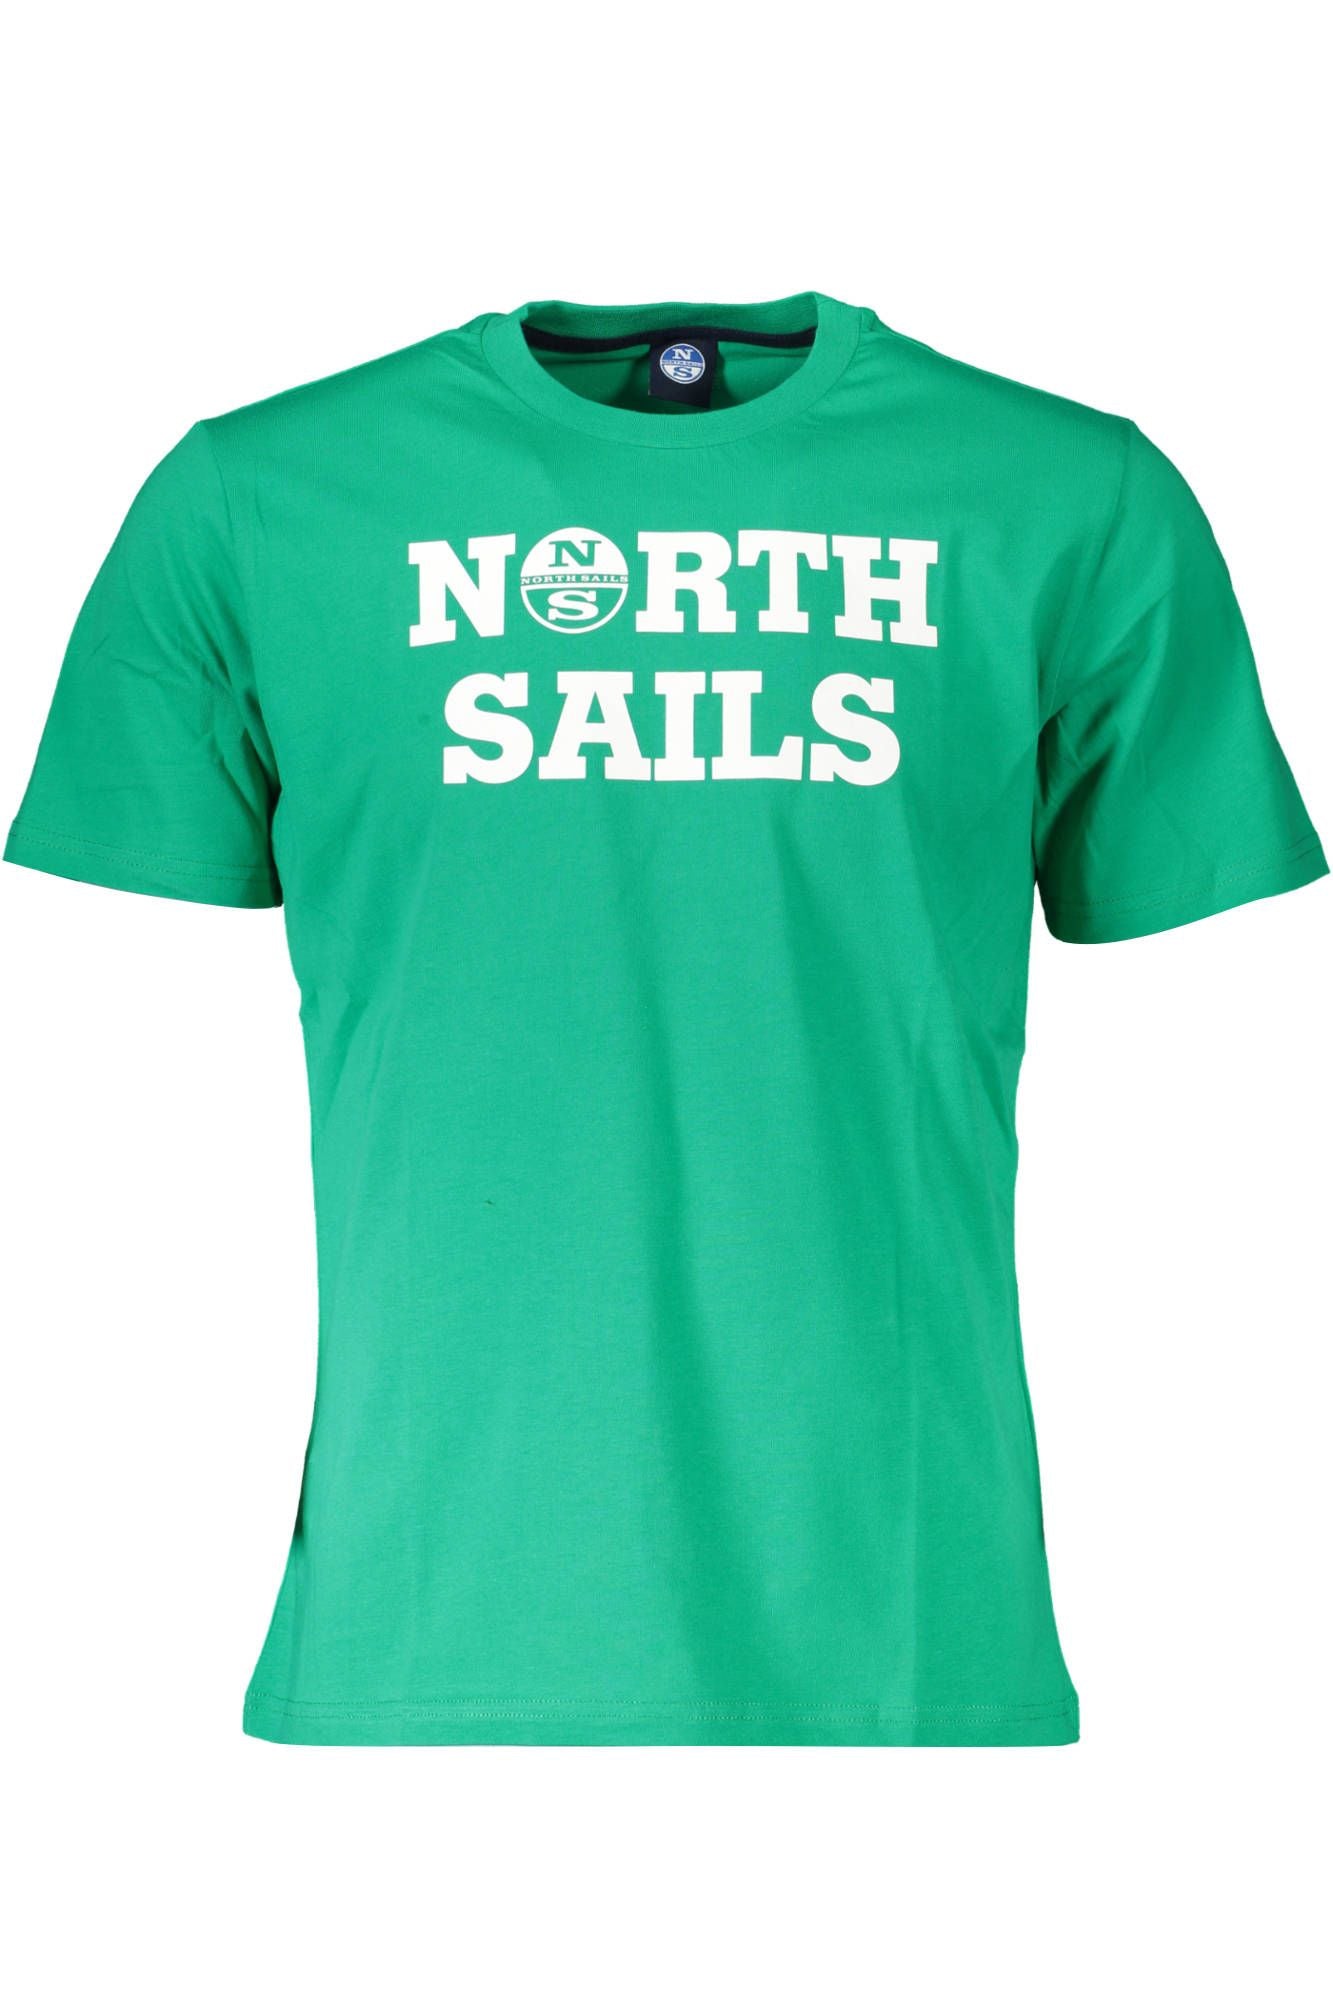 North Sails Emerald Charm Short Sleeve Printed Tee